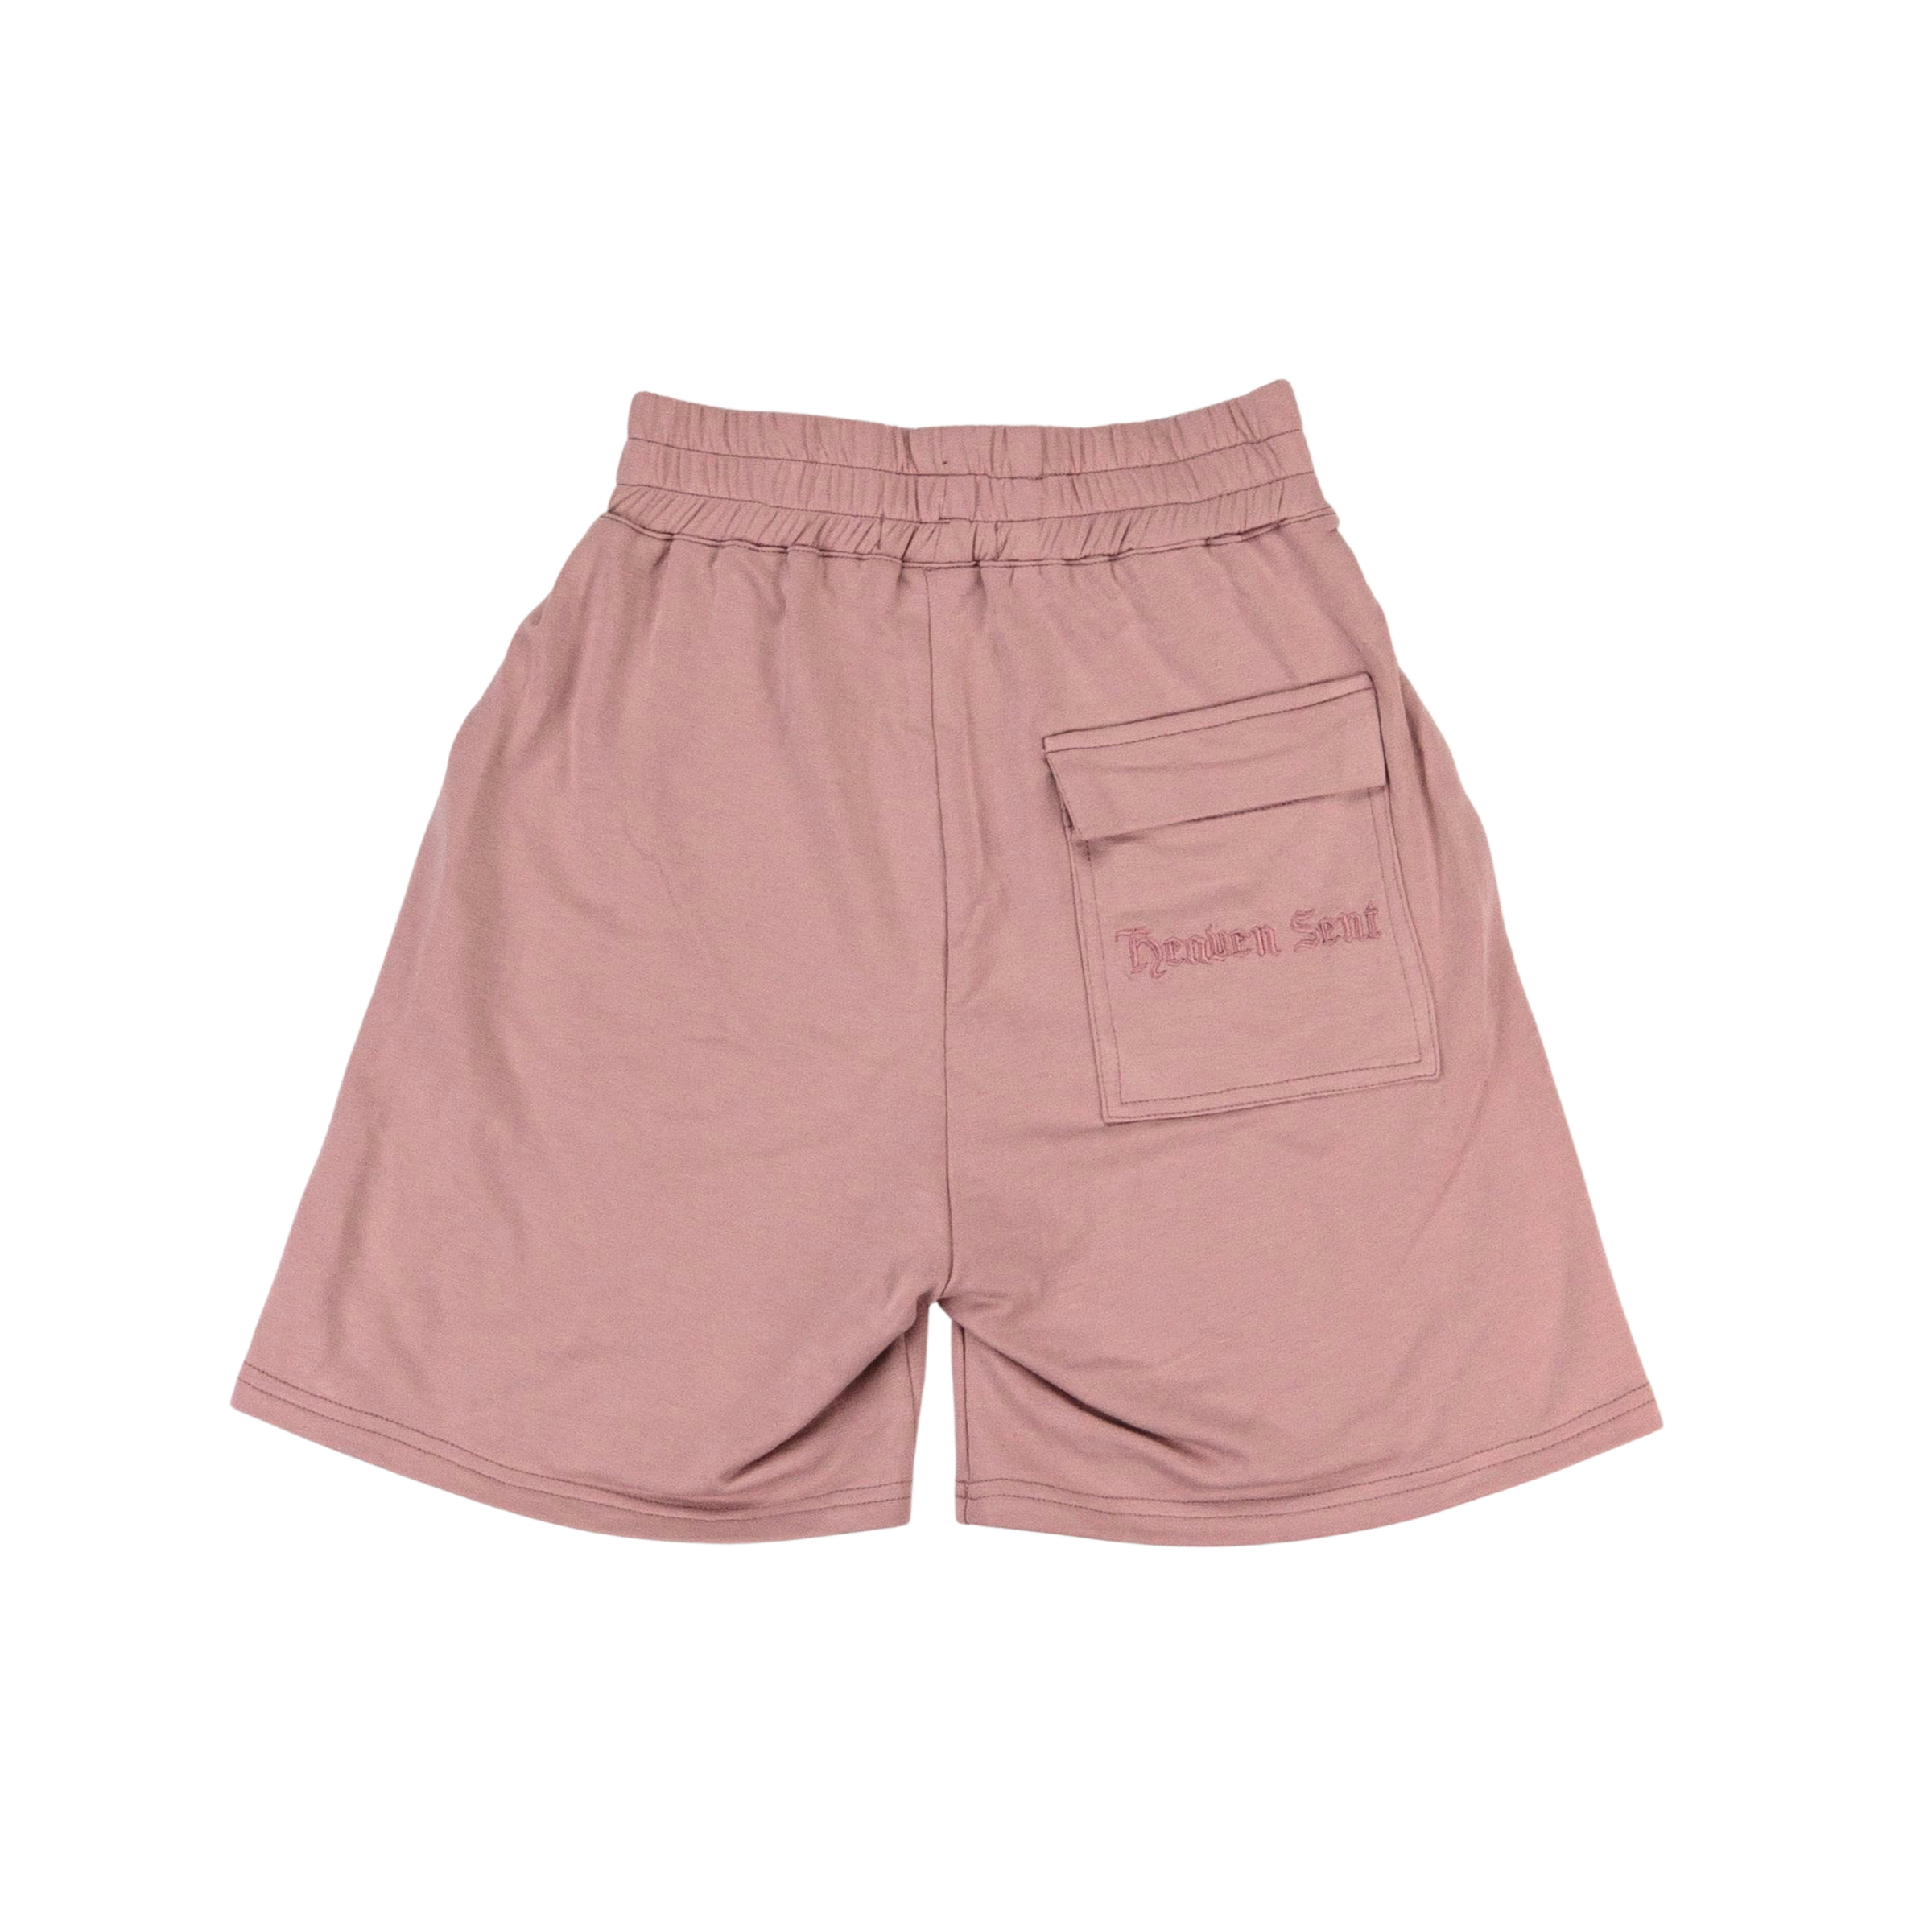 Pink Heaven Sent Shorts